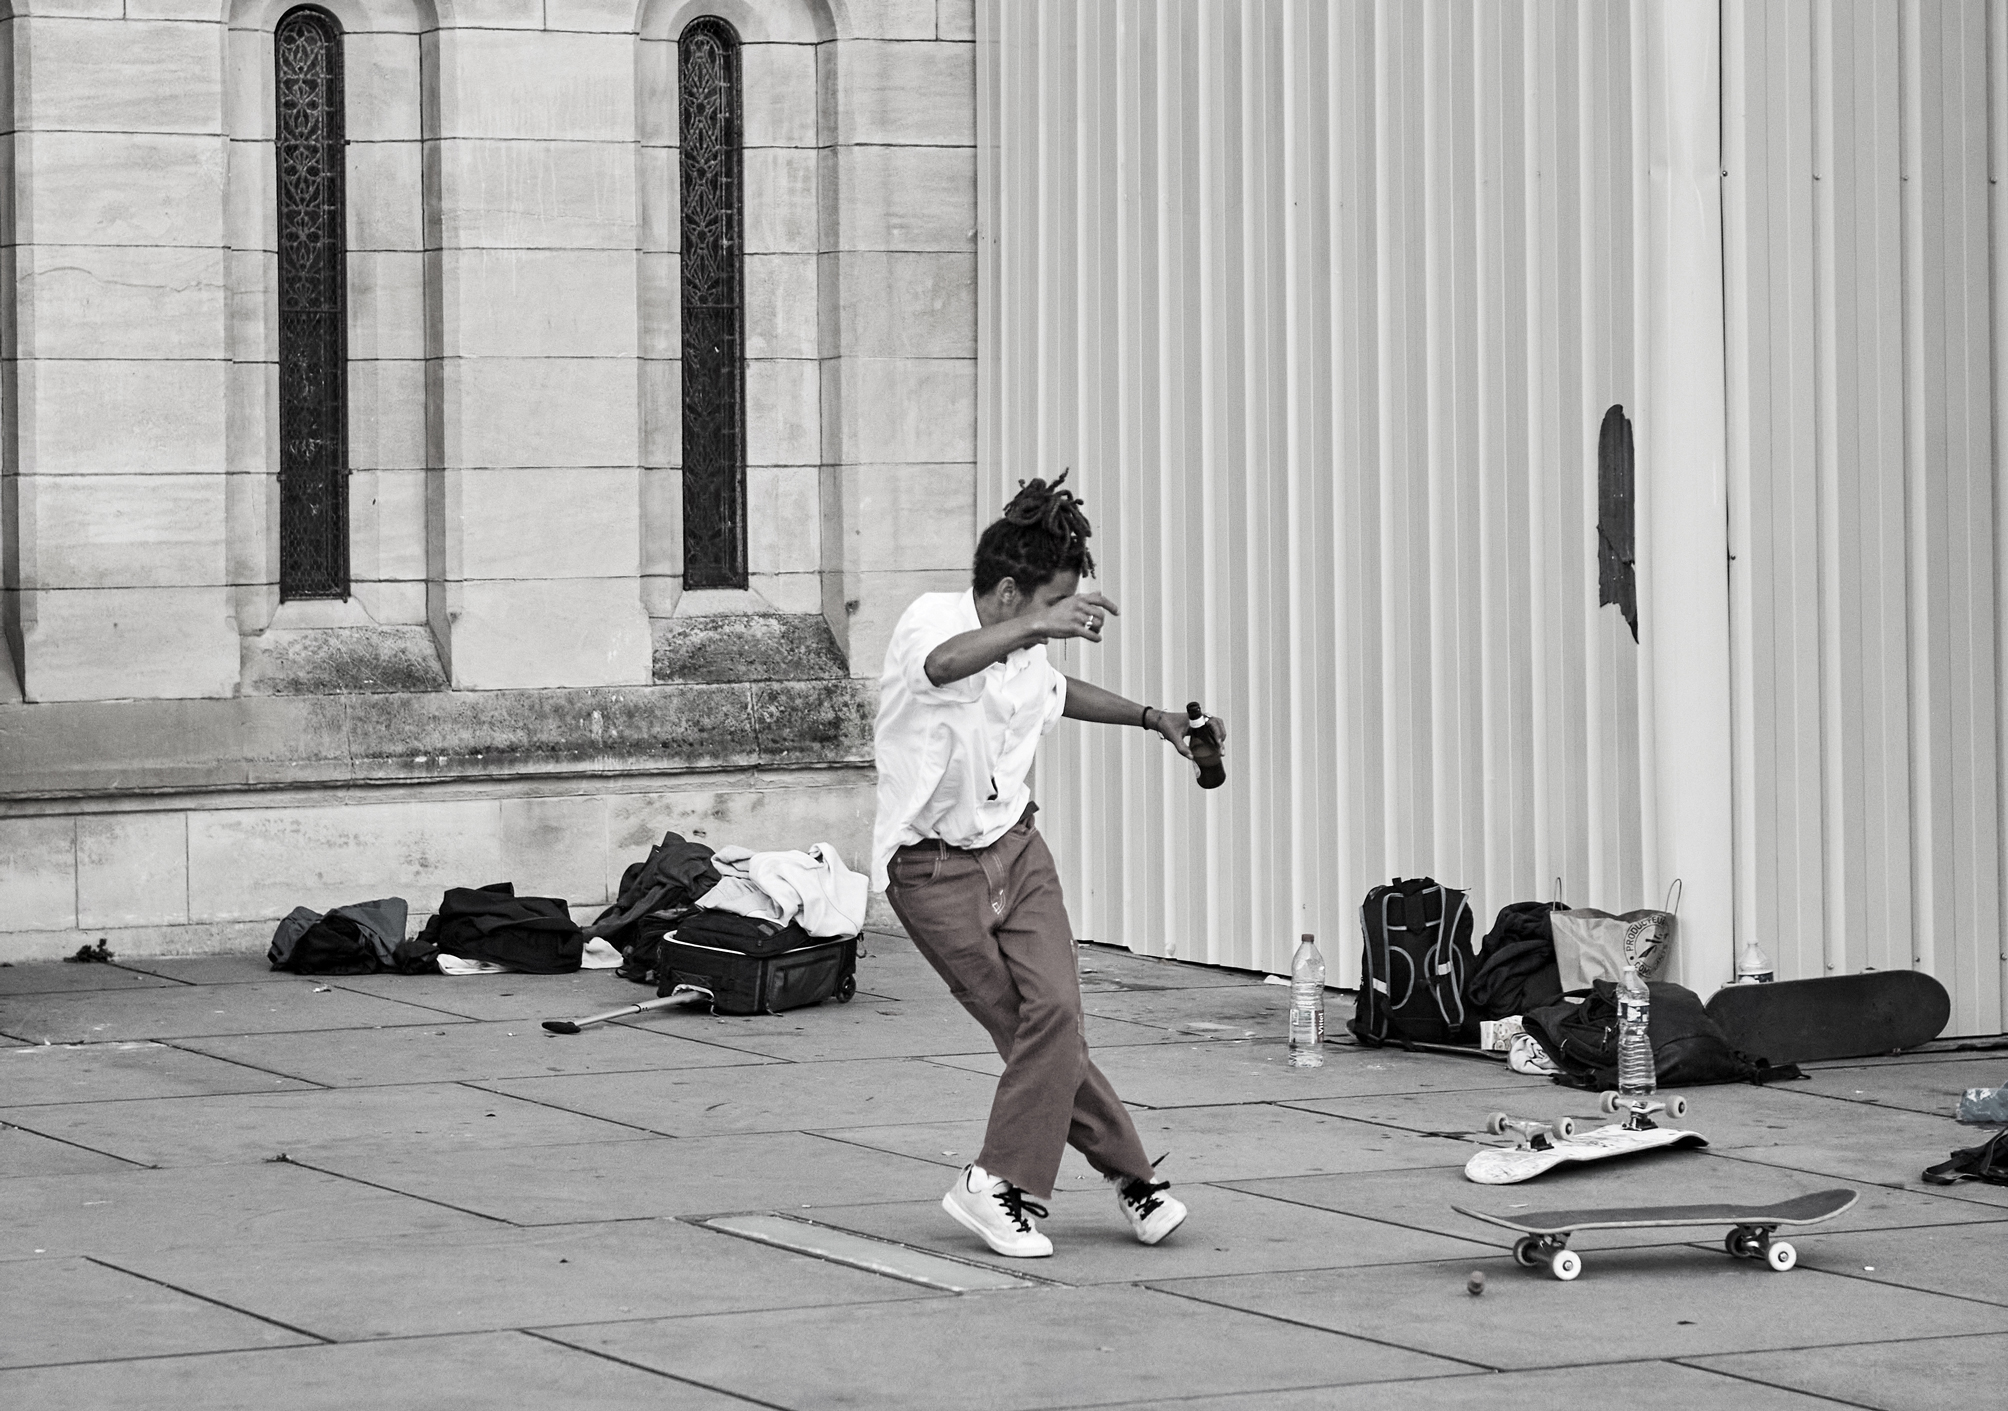 Surge X Sanjo Skateboarding – Vídeo E Nova Colecção Já Disponível